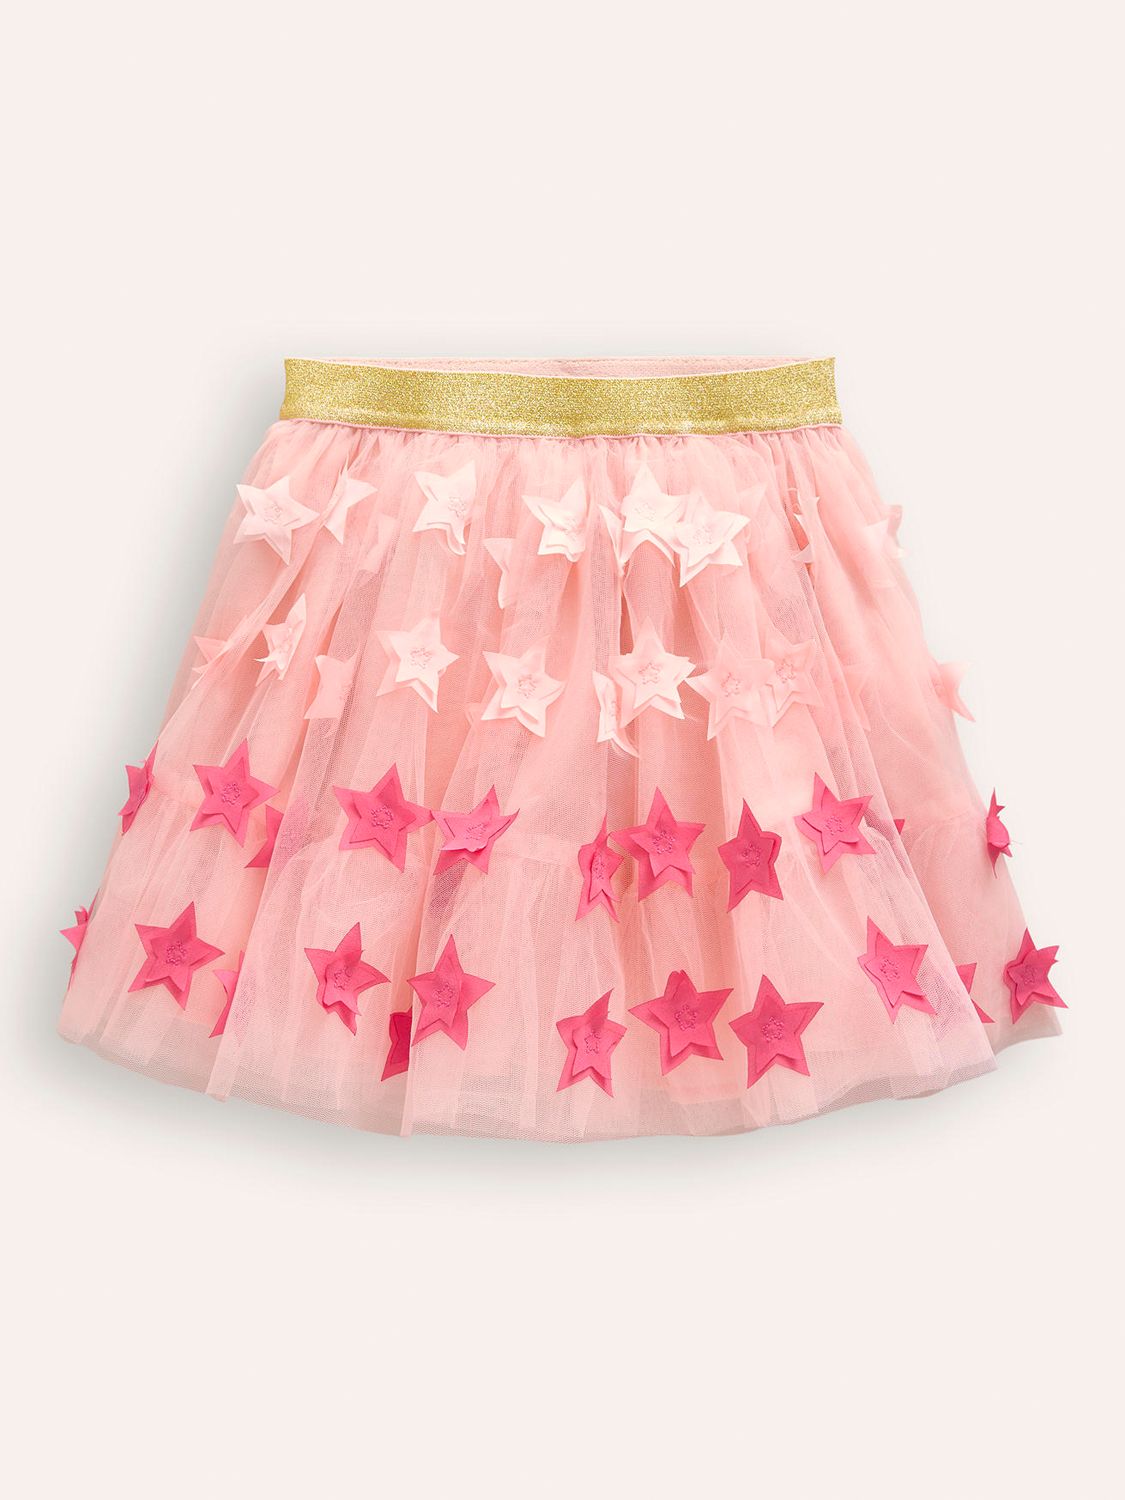 Mini Boden Kids' Tulle Star Mini Skirt, Pink Stars, 2-3 years